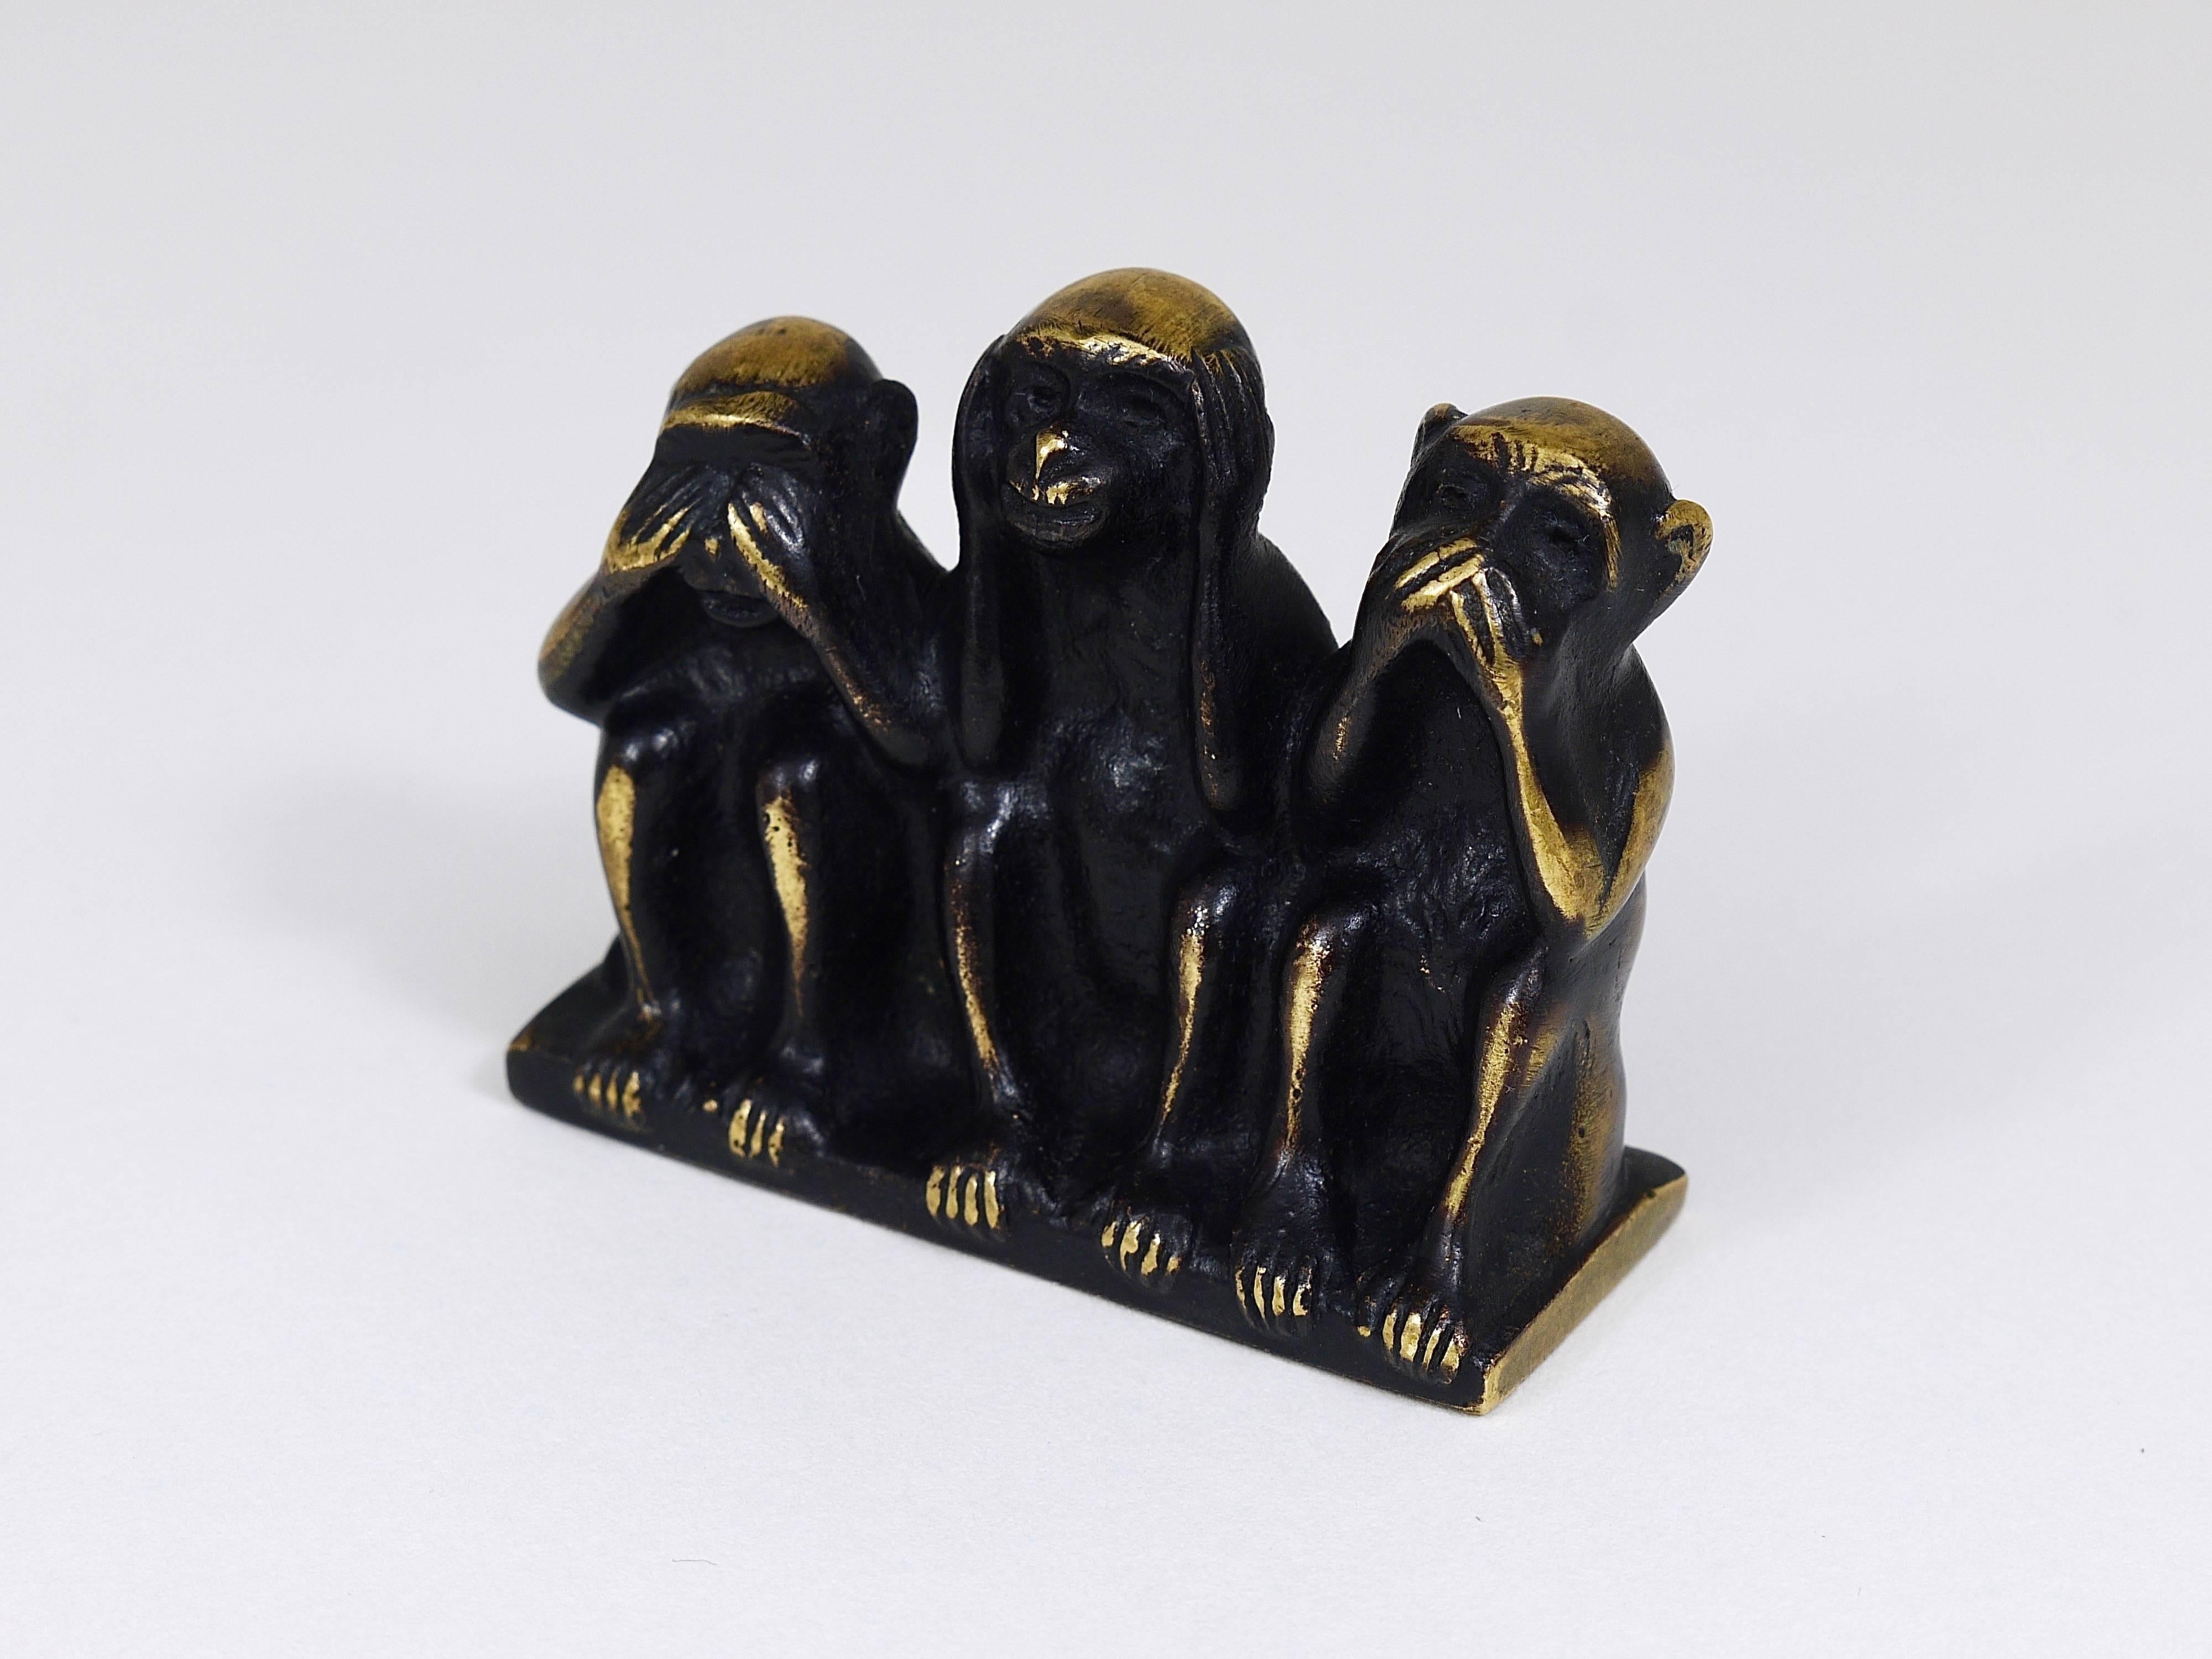 three wise monkeys figurines